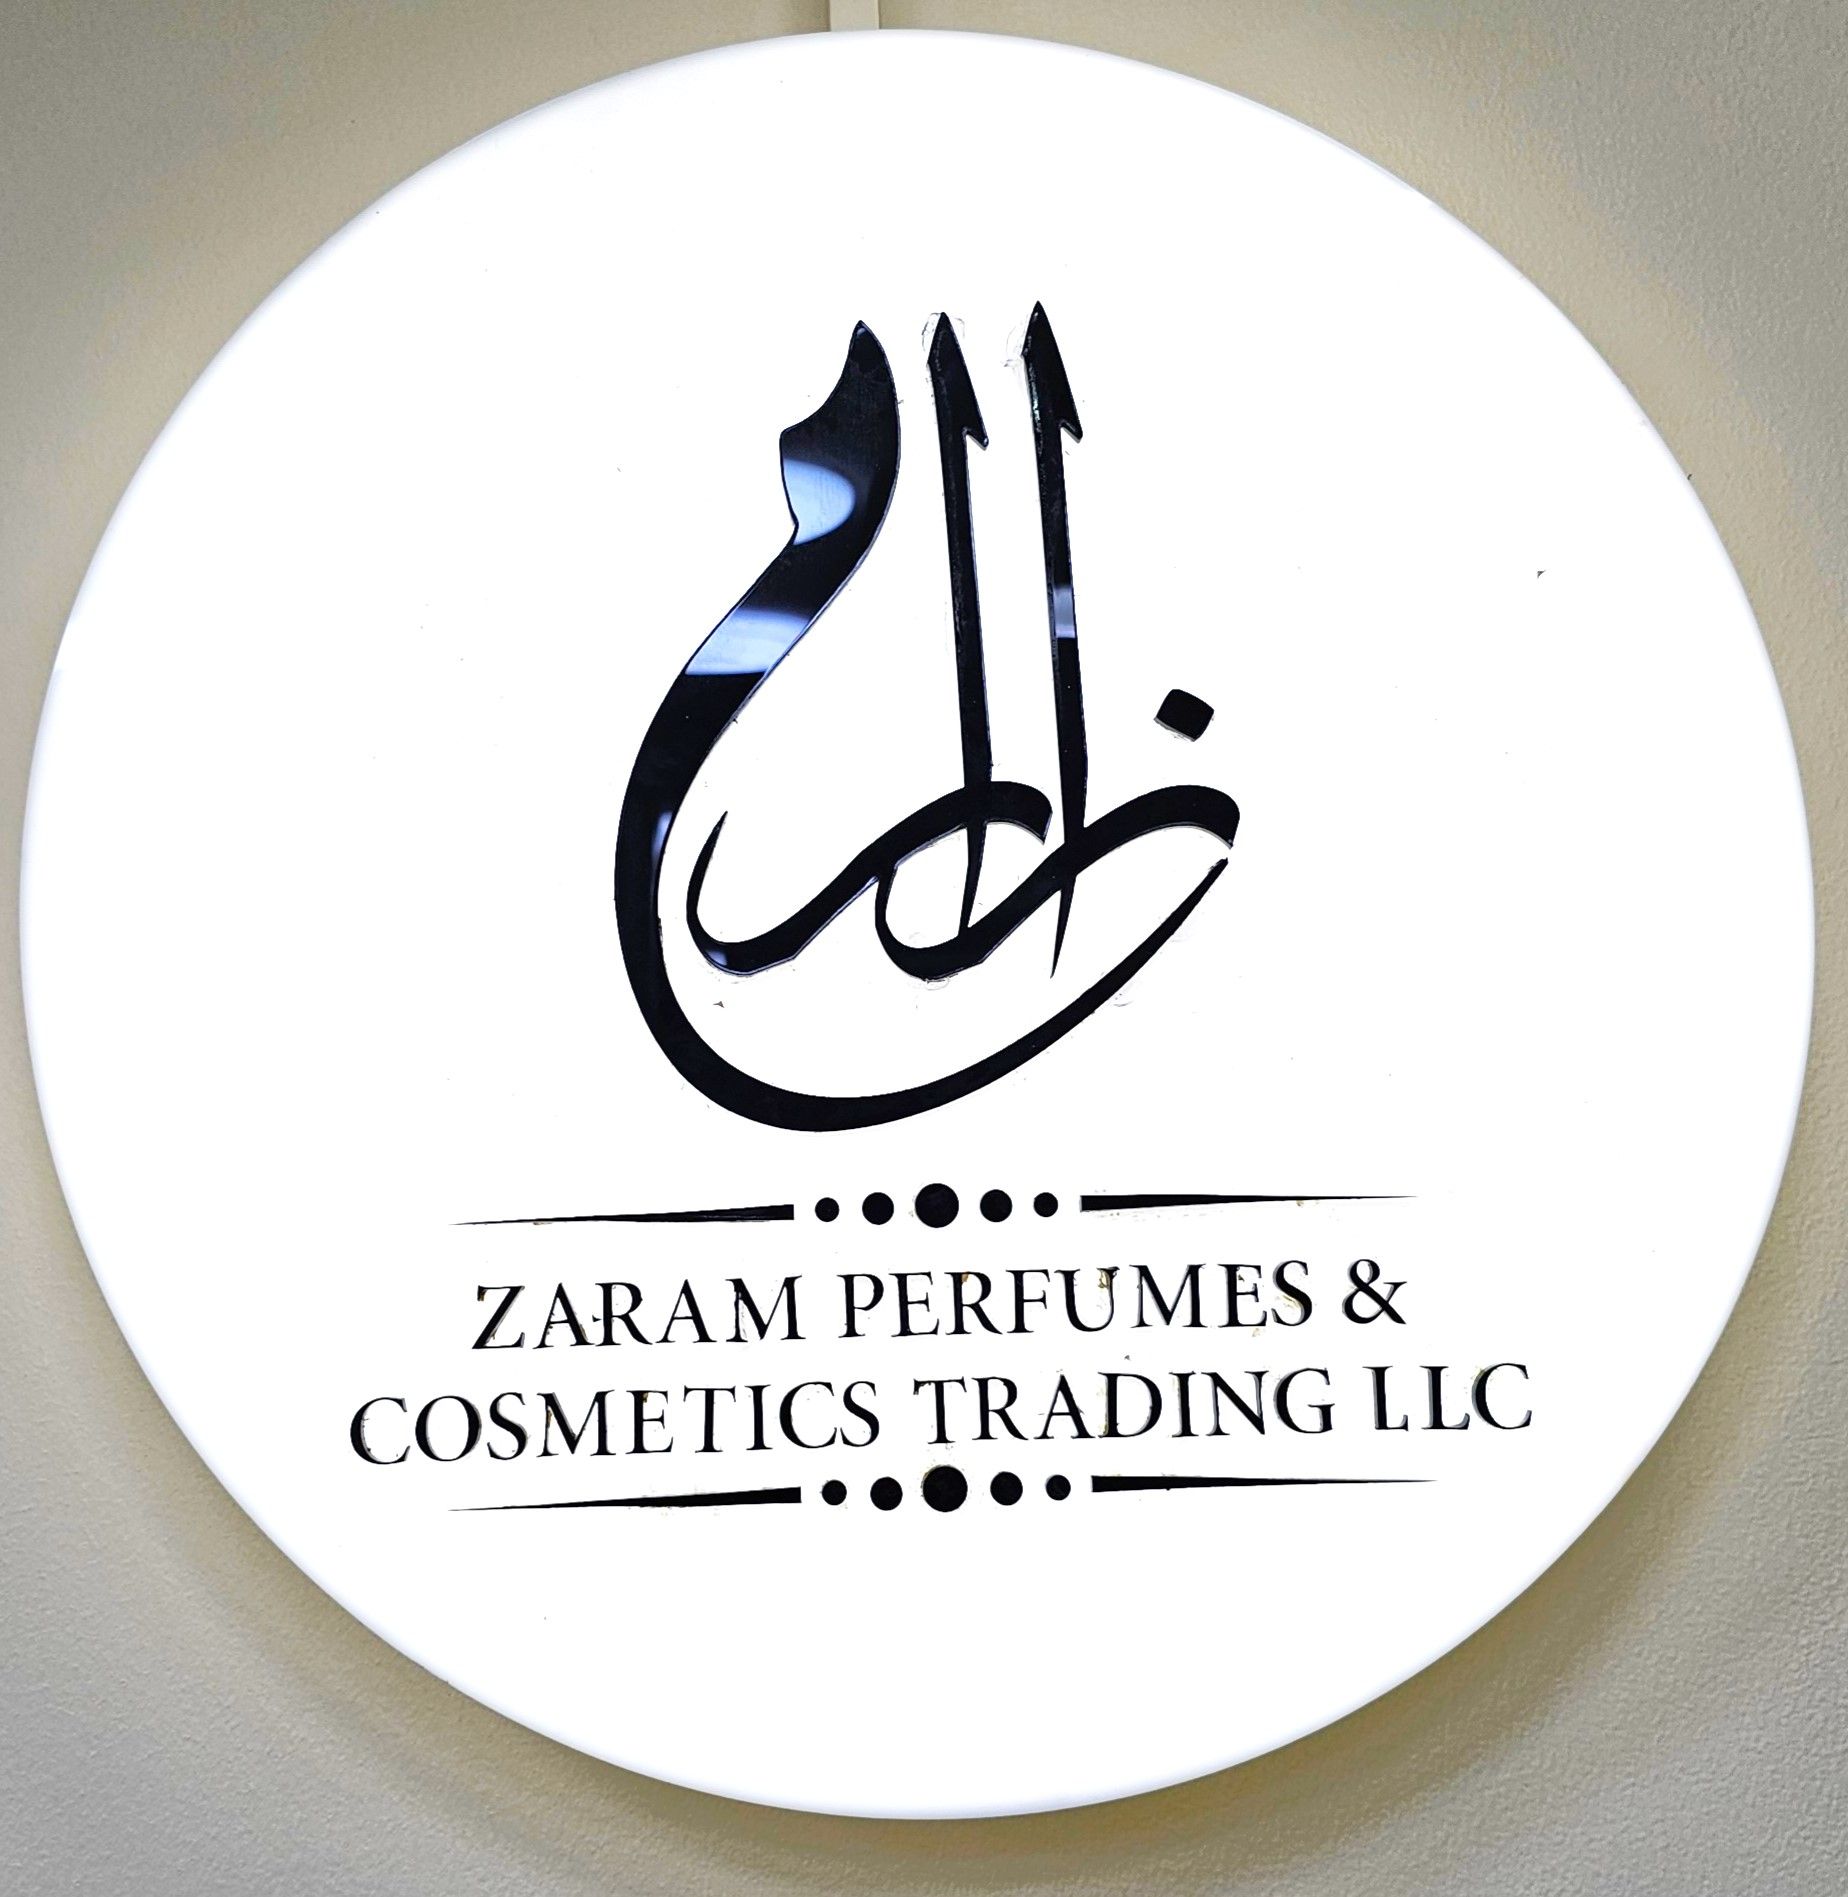 ZARAM PERFUMES AND COSMETICS TRADING LLC.